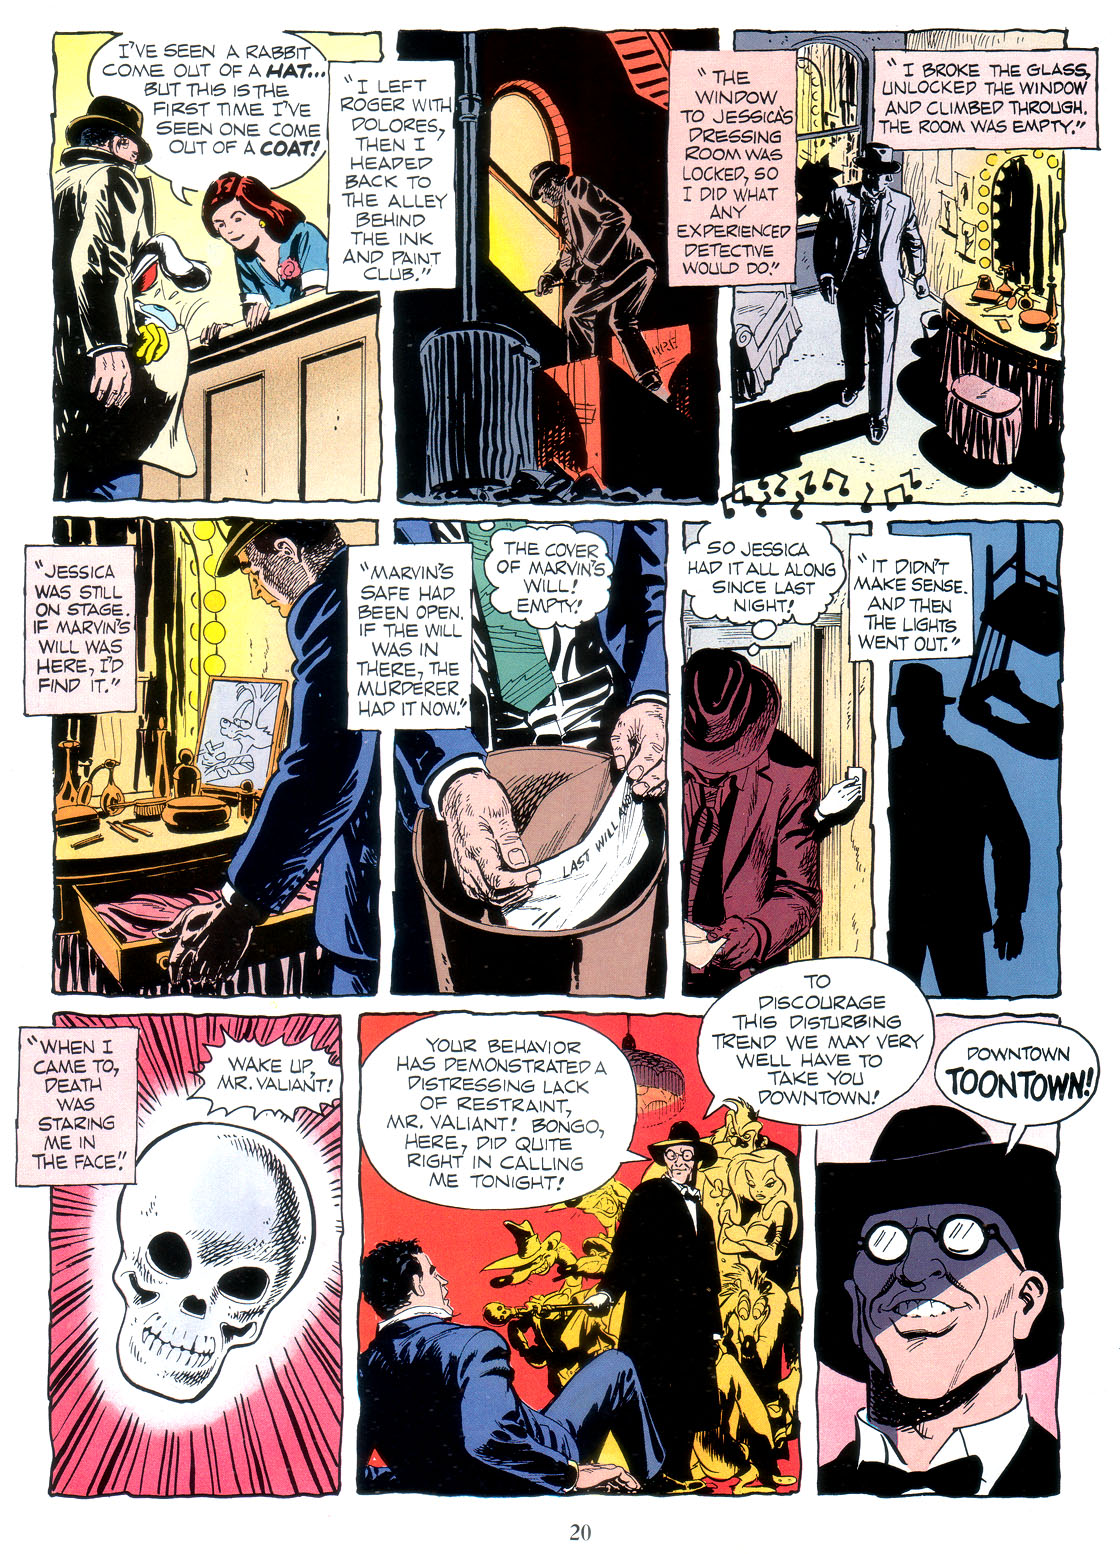 Marvel Graphic Novel issue 41 - Who Framed Roger Rabbit - Page 22